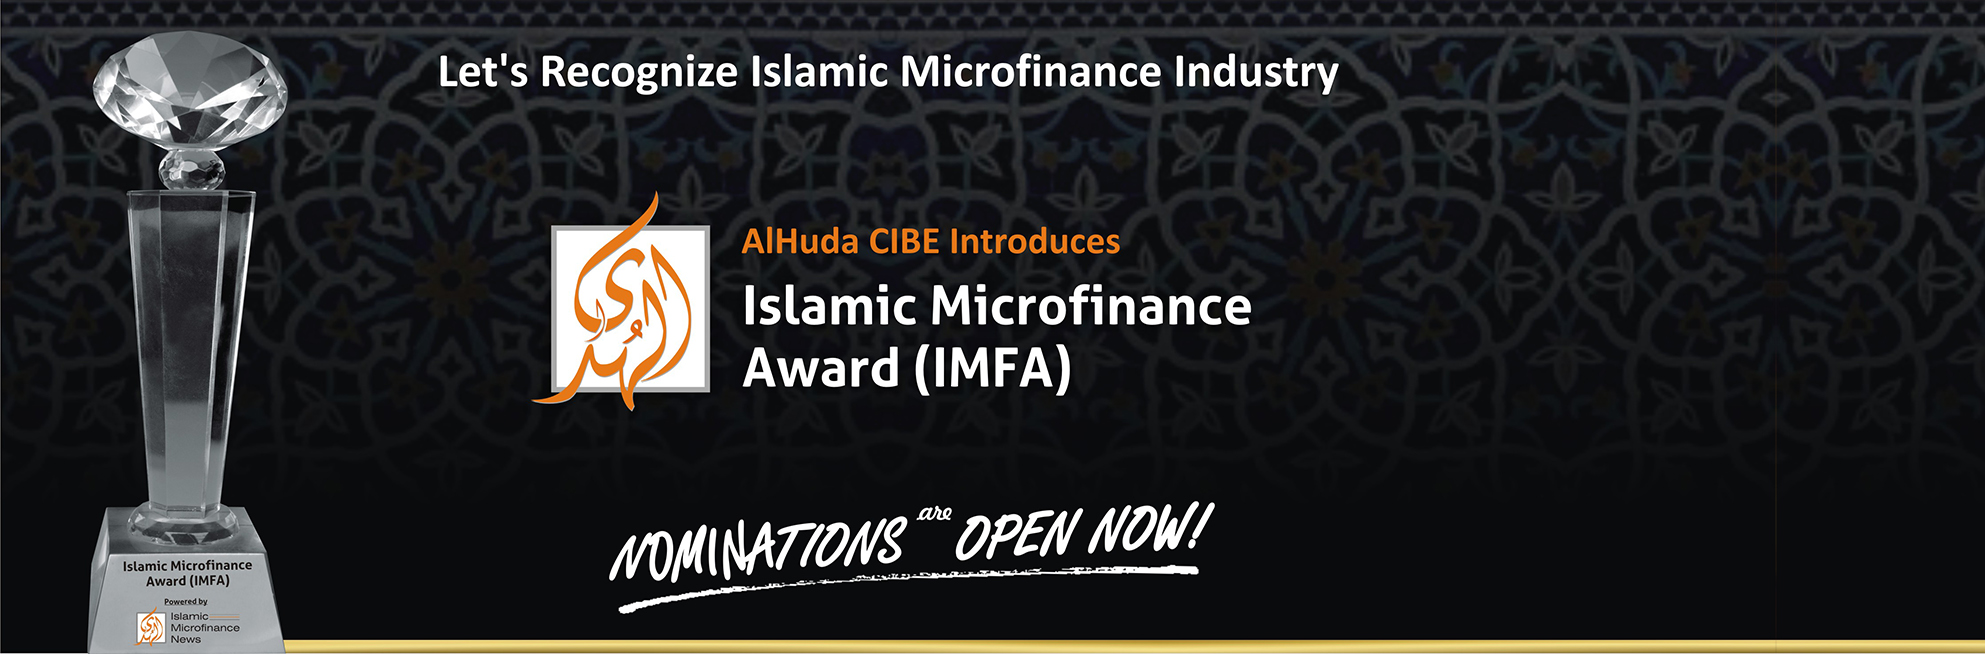 1st Islamic Microfinance Awards - 2016 
Will be held on 9th November in Nairobi – Kenya